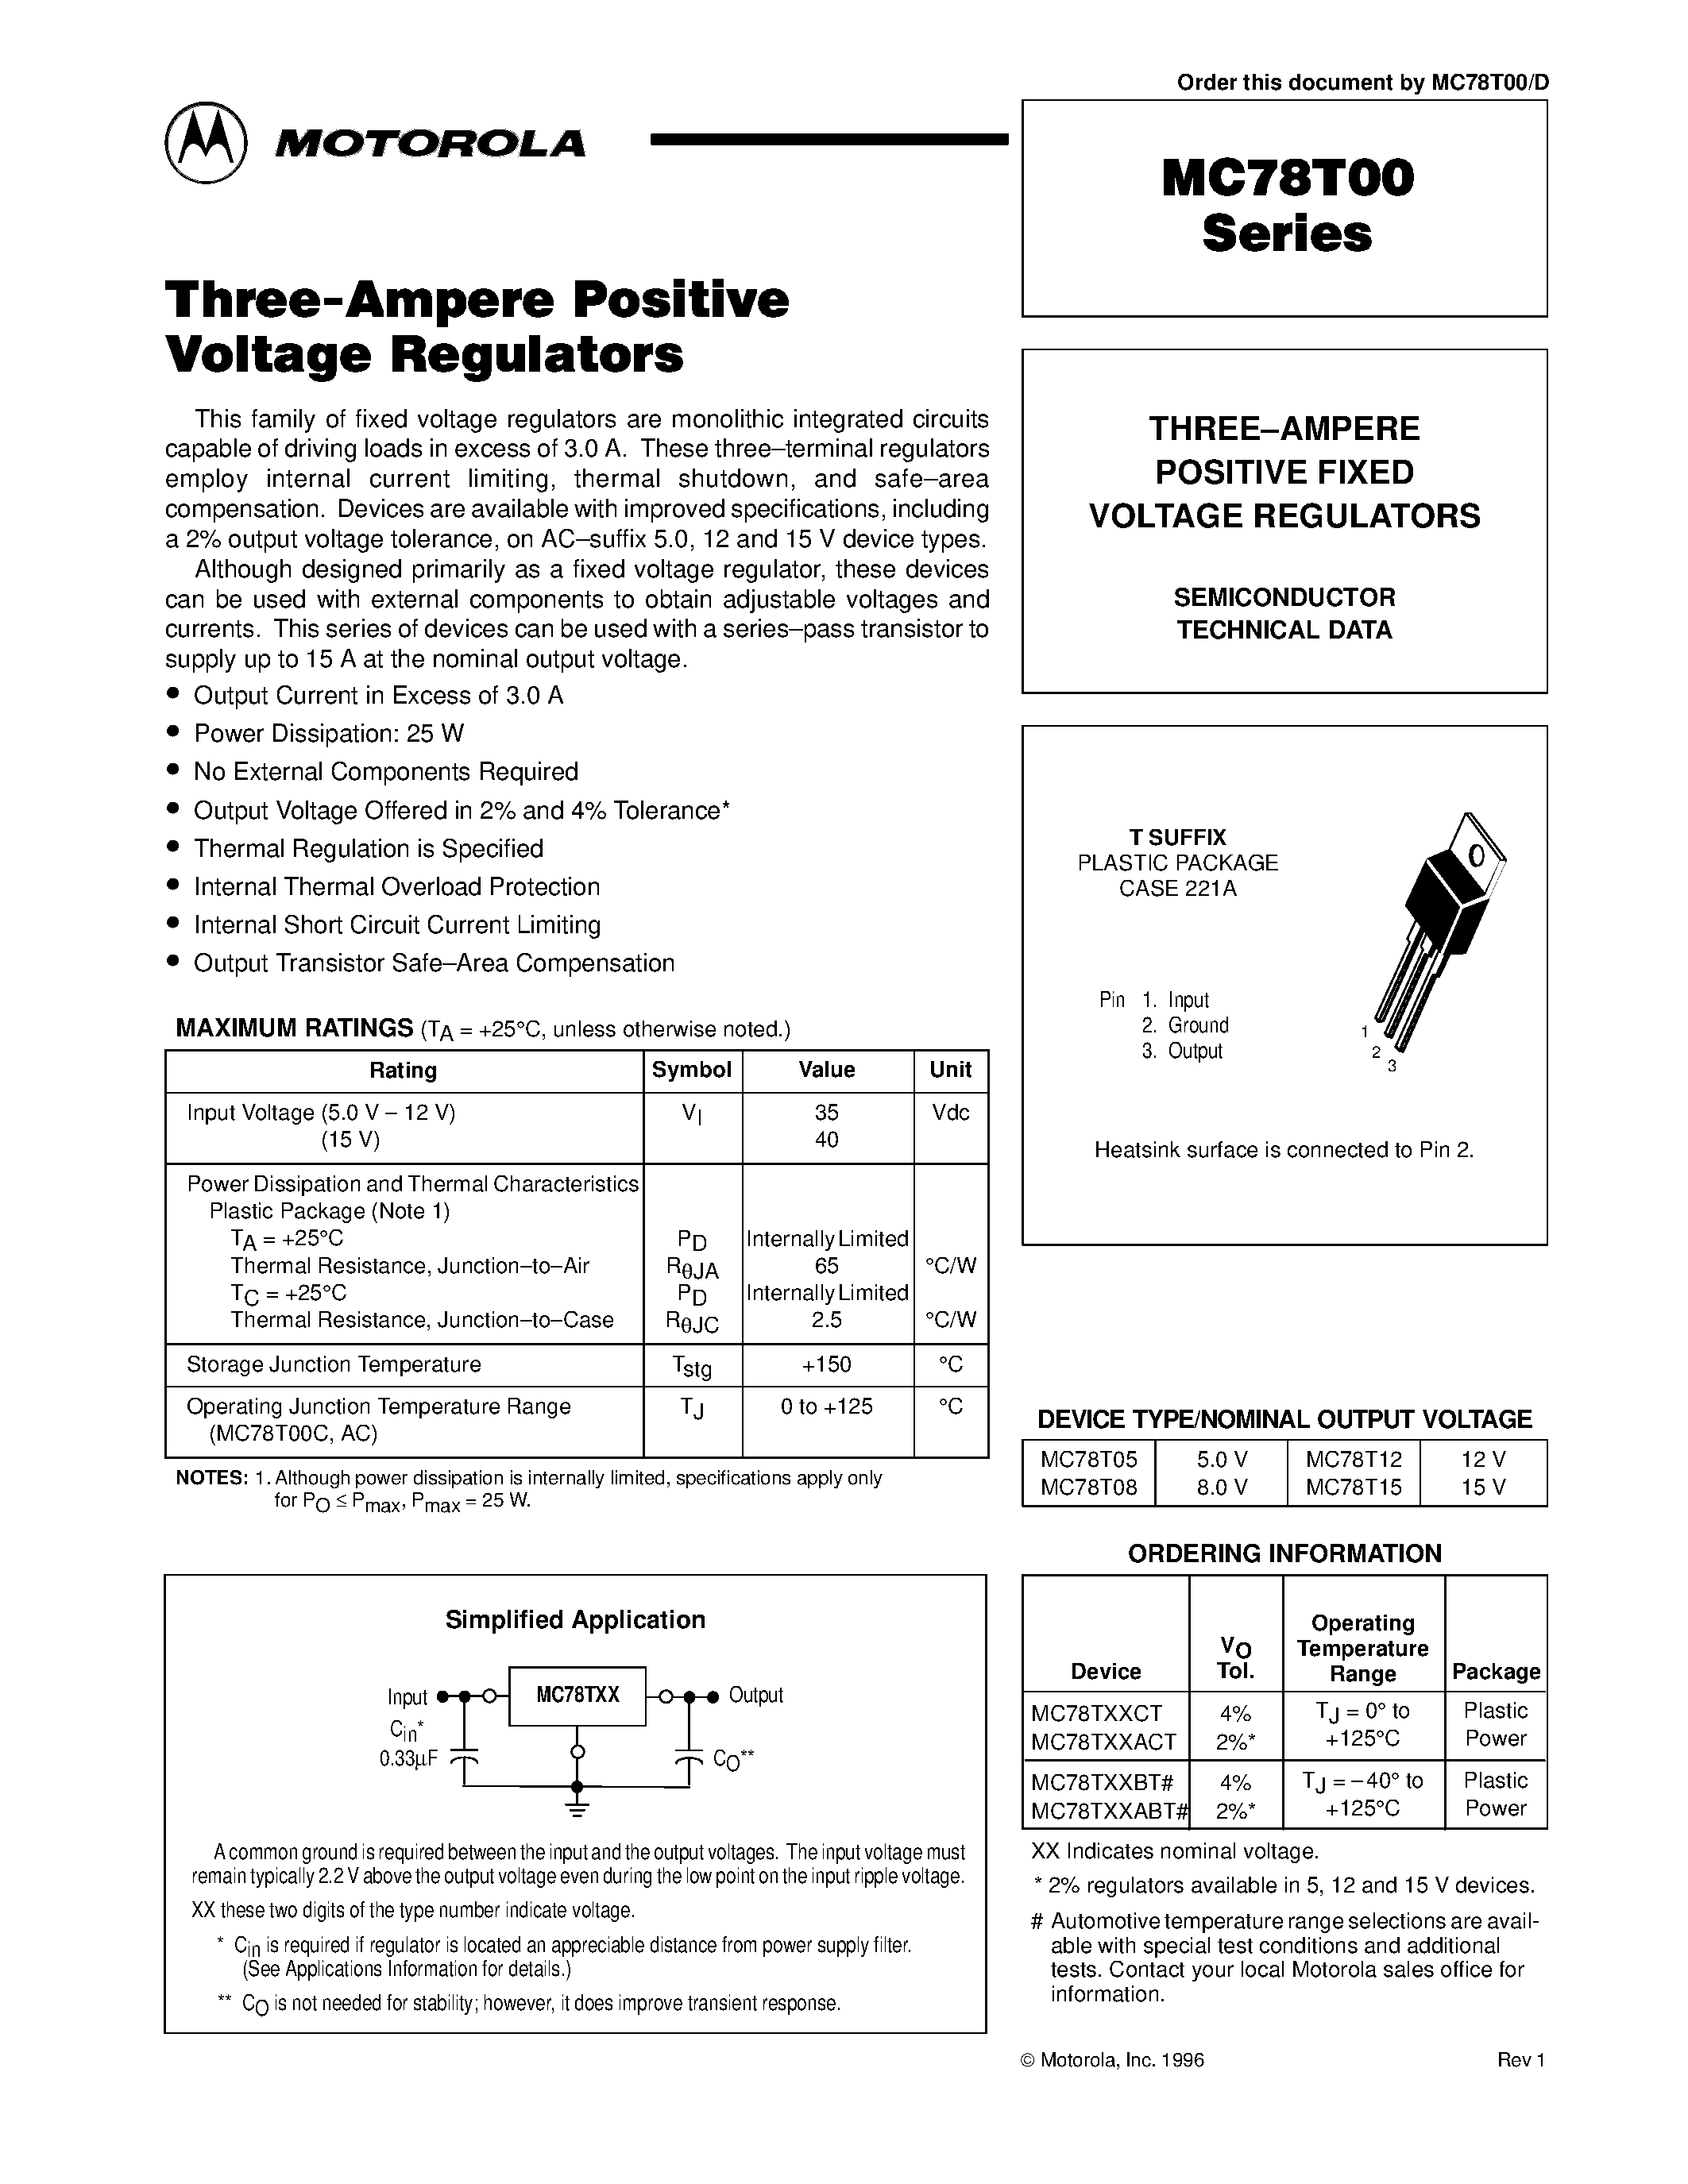 Даташит MC78T08ACT - THREE-AMPERE POSITIVE FIXED VOLTAGE REGULATORS страница 1